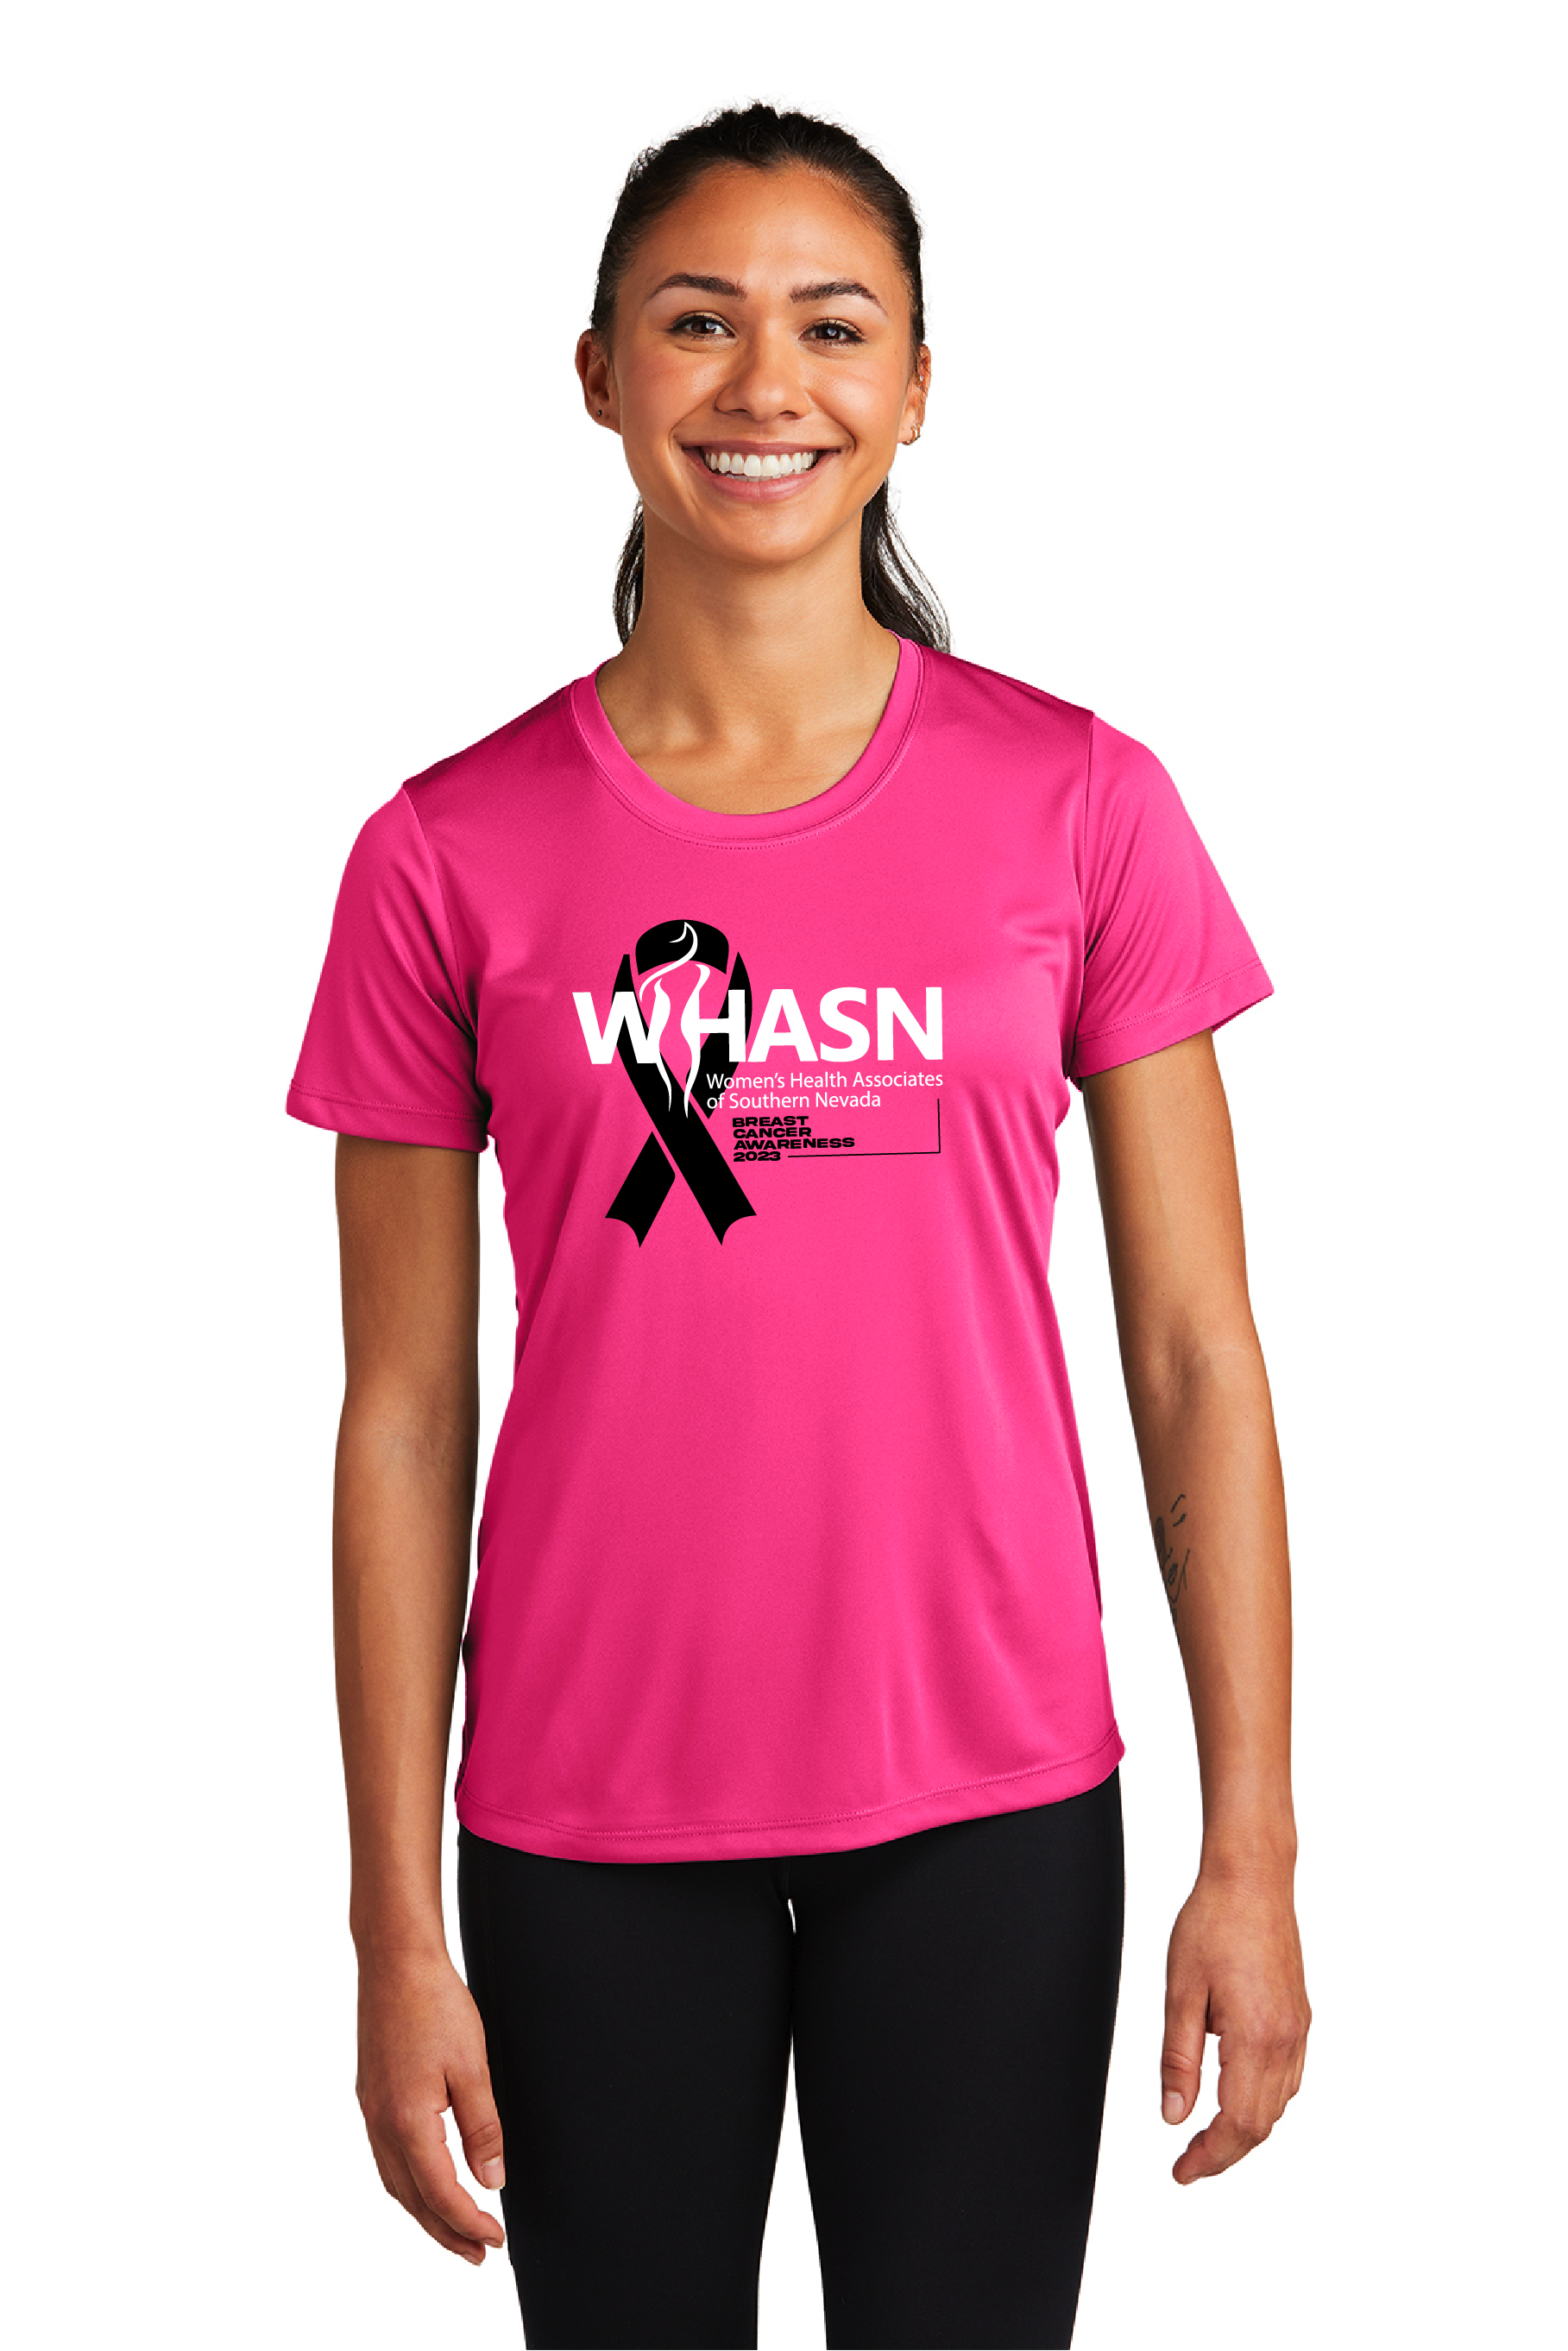 WHASN Ladies' Breast Cancer Awareness T-Shirt